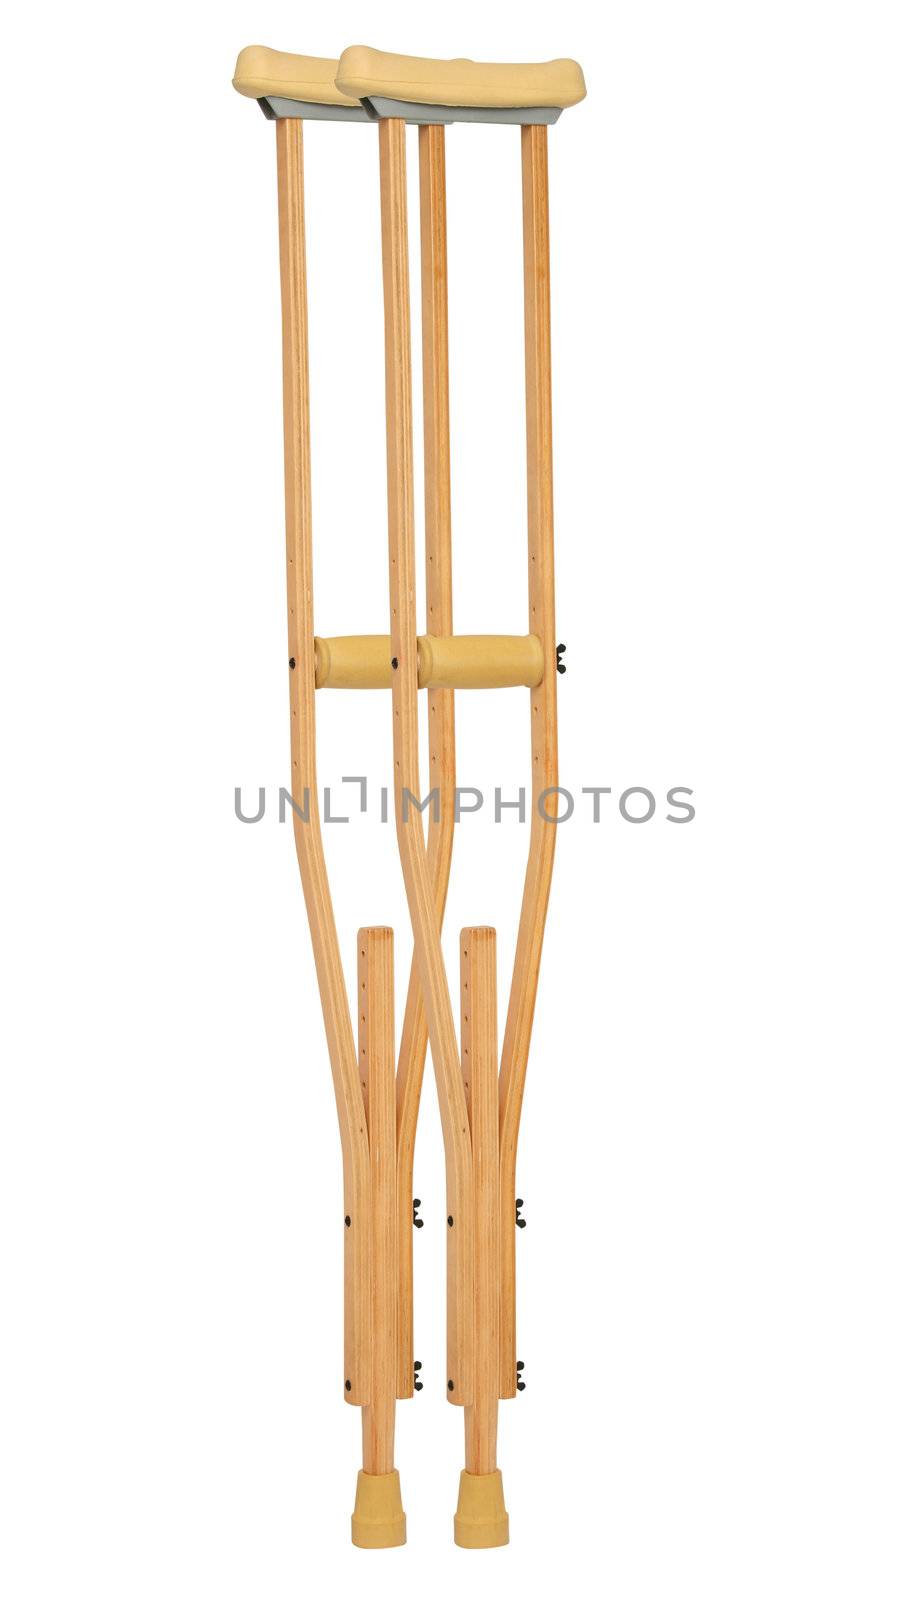 Pair of crutches by Erdosain